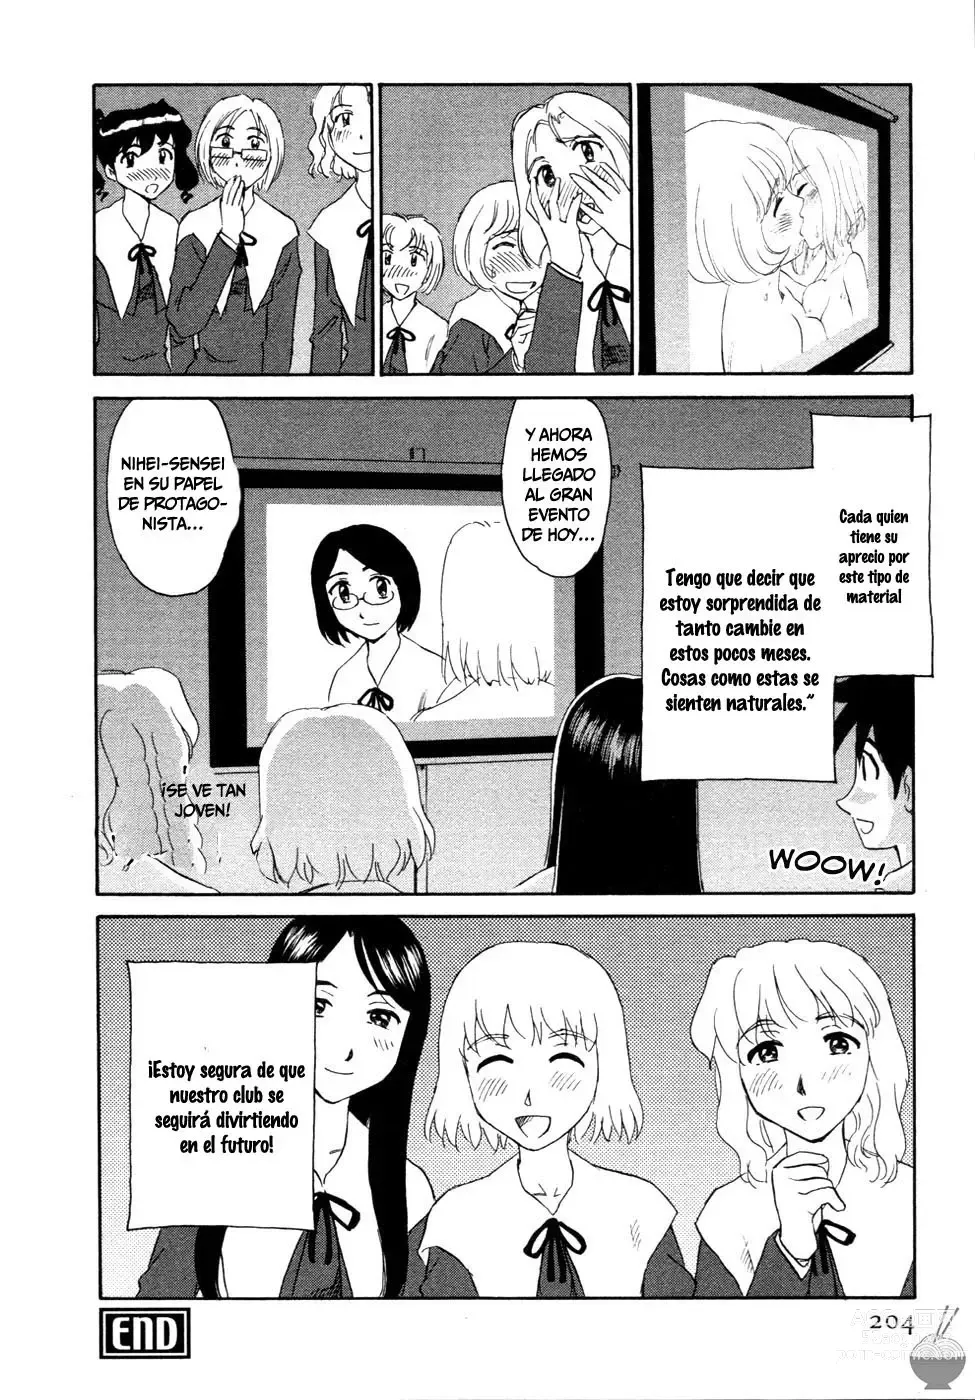 Page 217 of manga Hana no Iro - Colors of Flowers